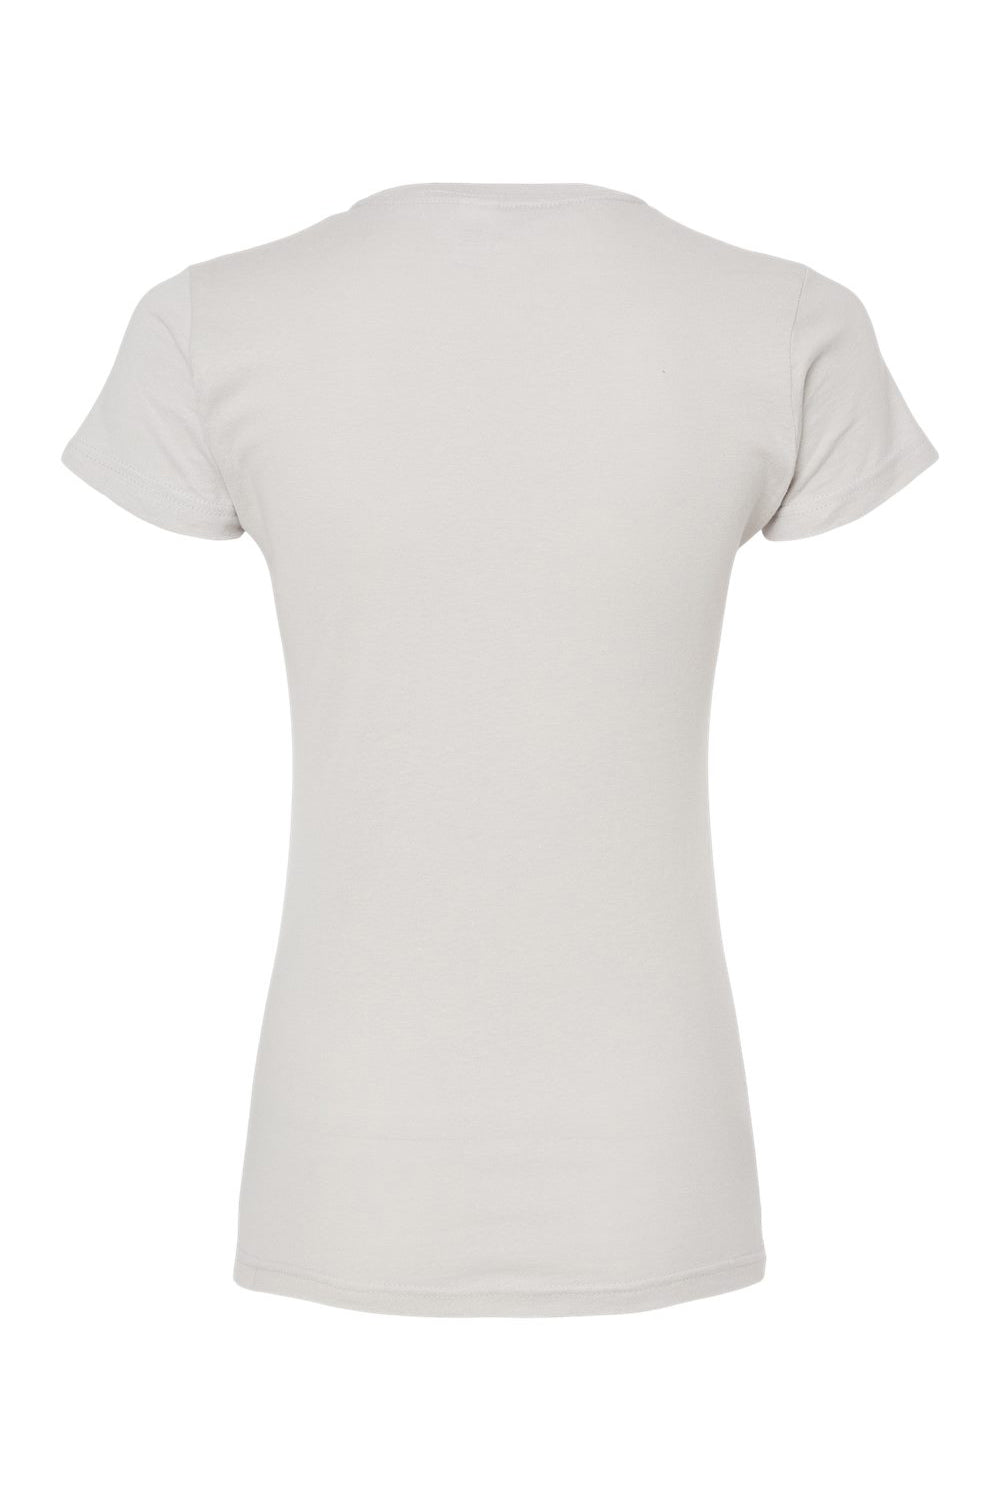 Tultex 213 Womens Fine Jersey Slim Fit Short Sleeve Crewneck T-Shirt Silver Grey Flat Back